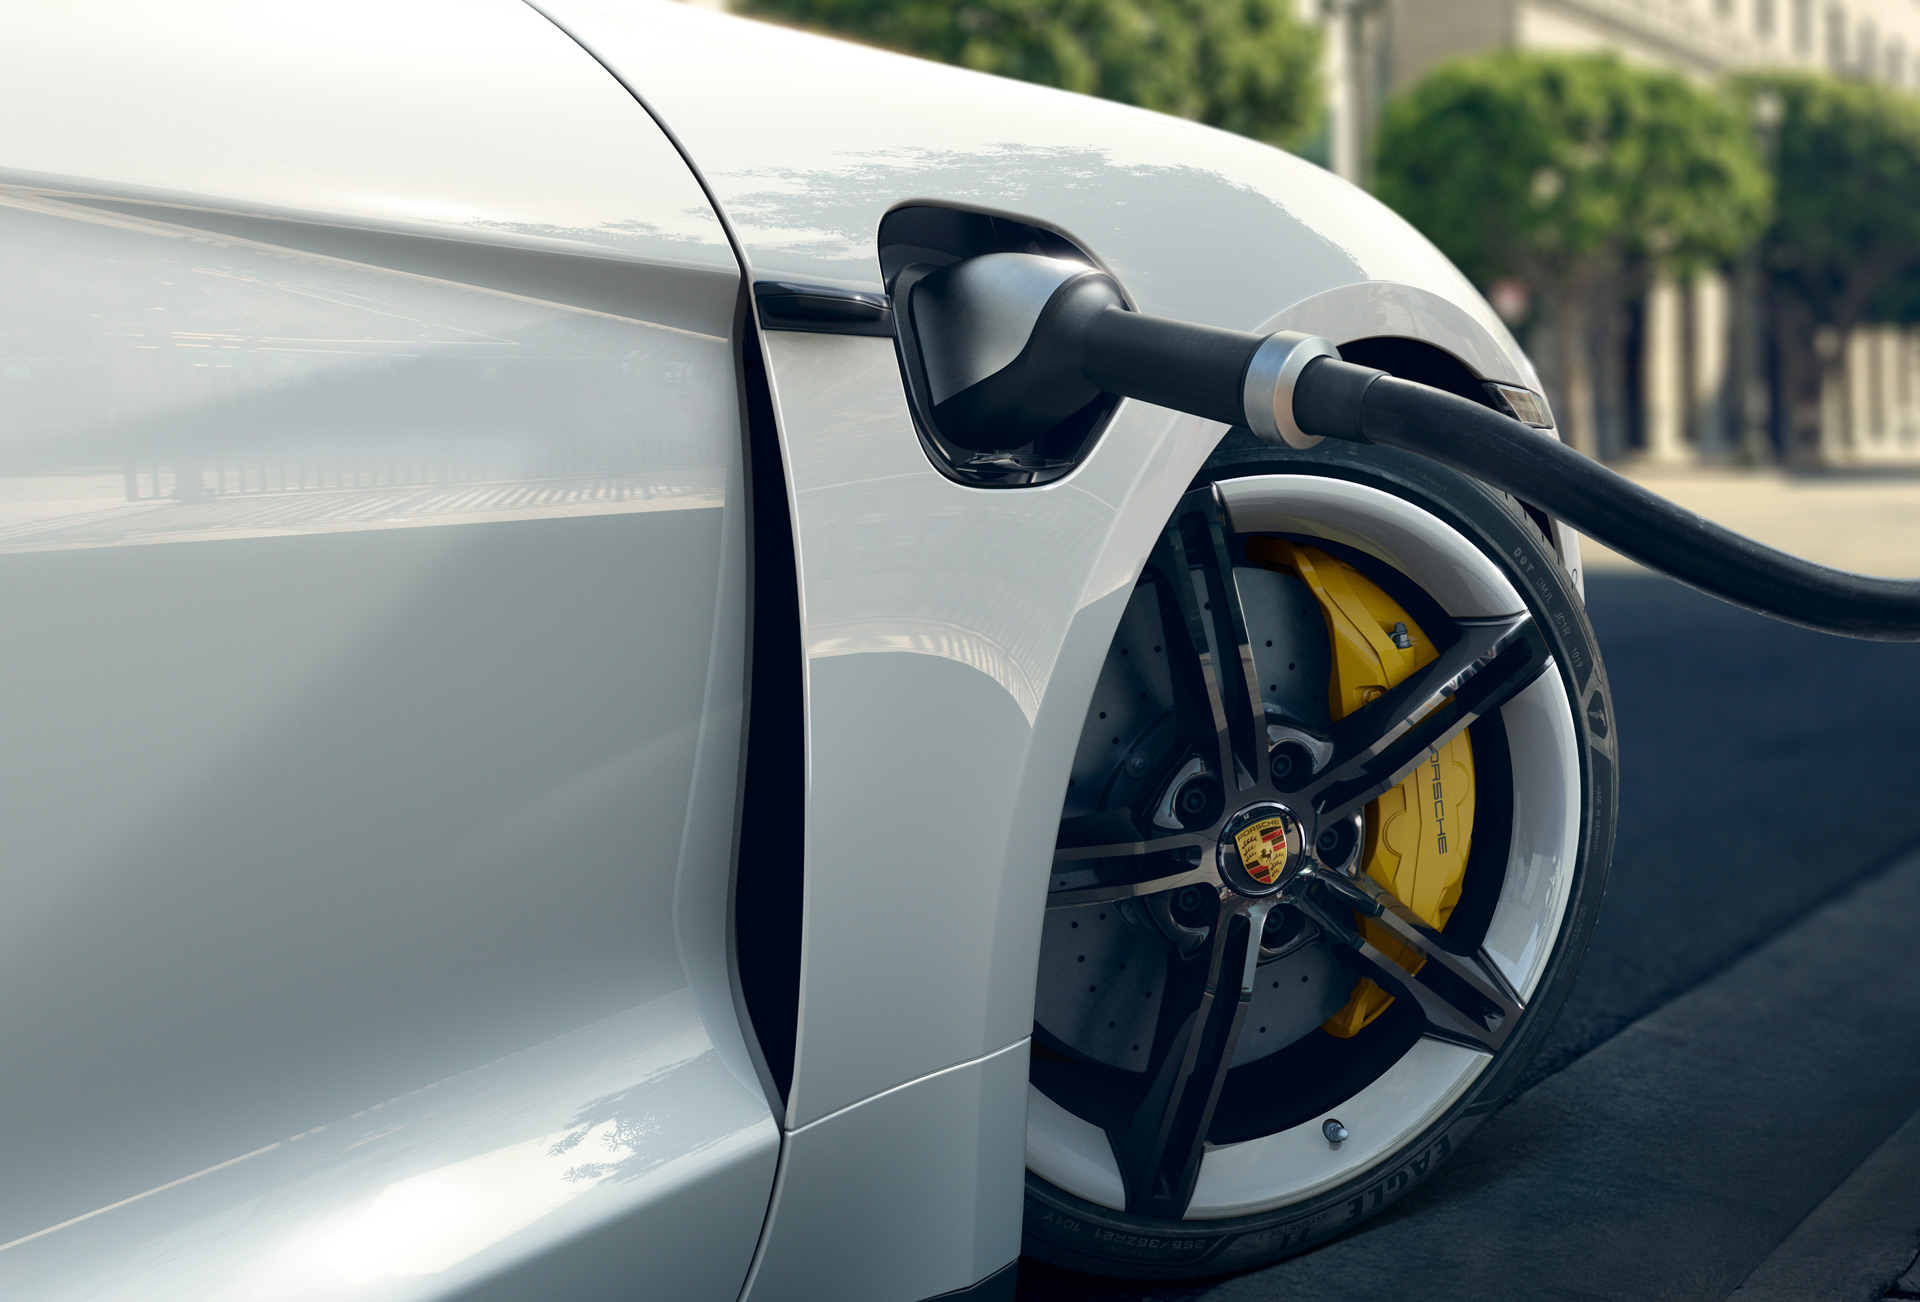 Porsche 400-kw charging, Tesla range complaints, Lordstown and Karma: Today’s Car News